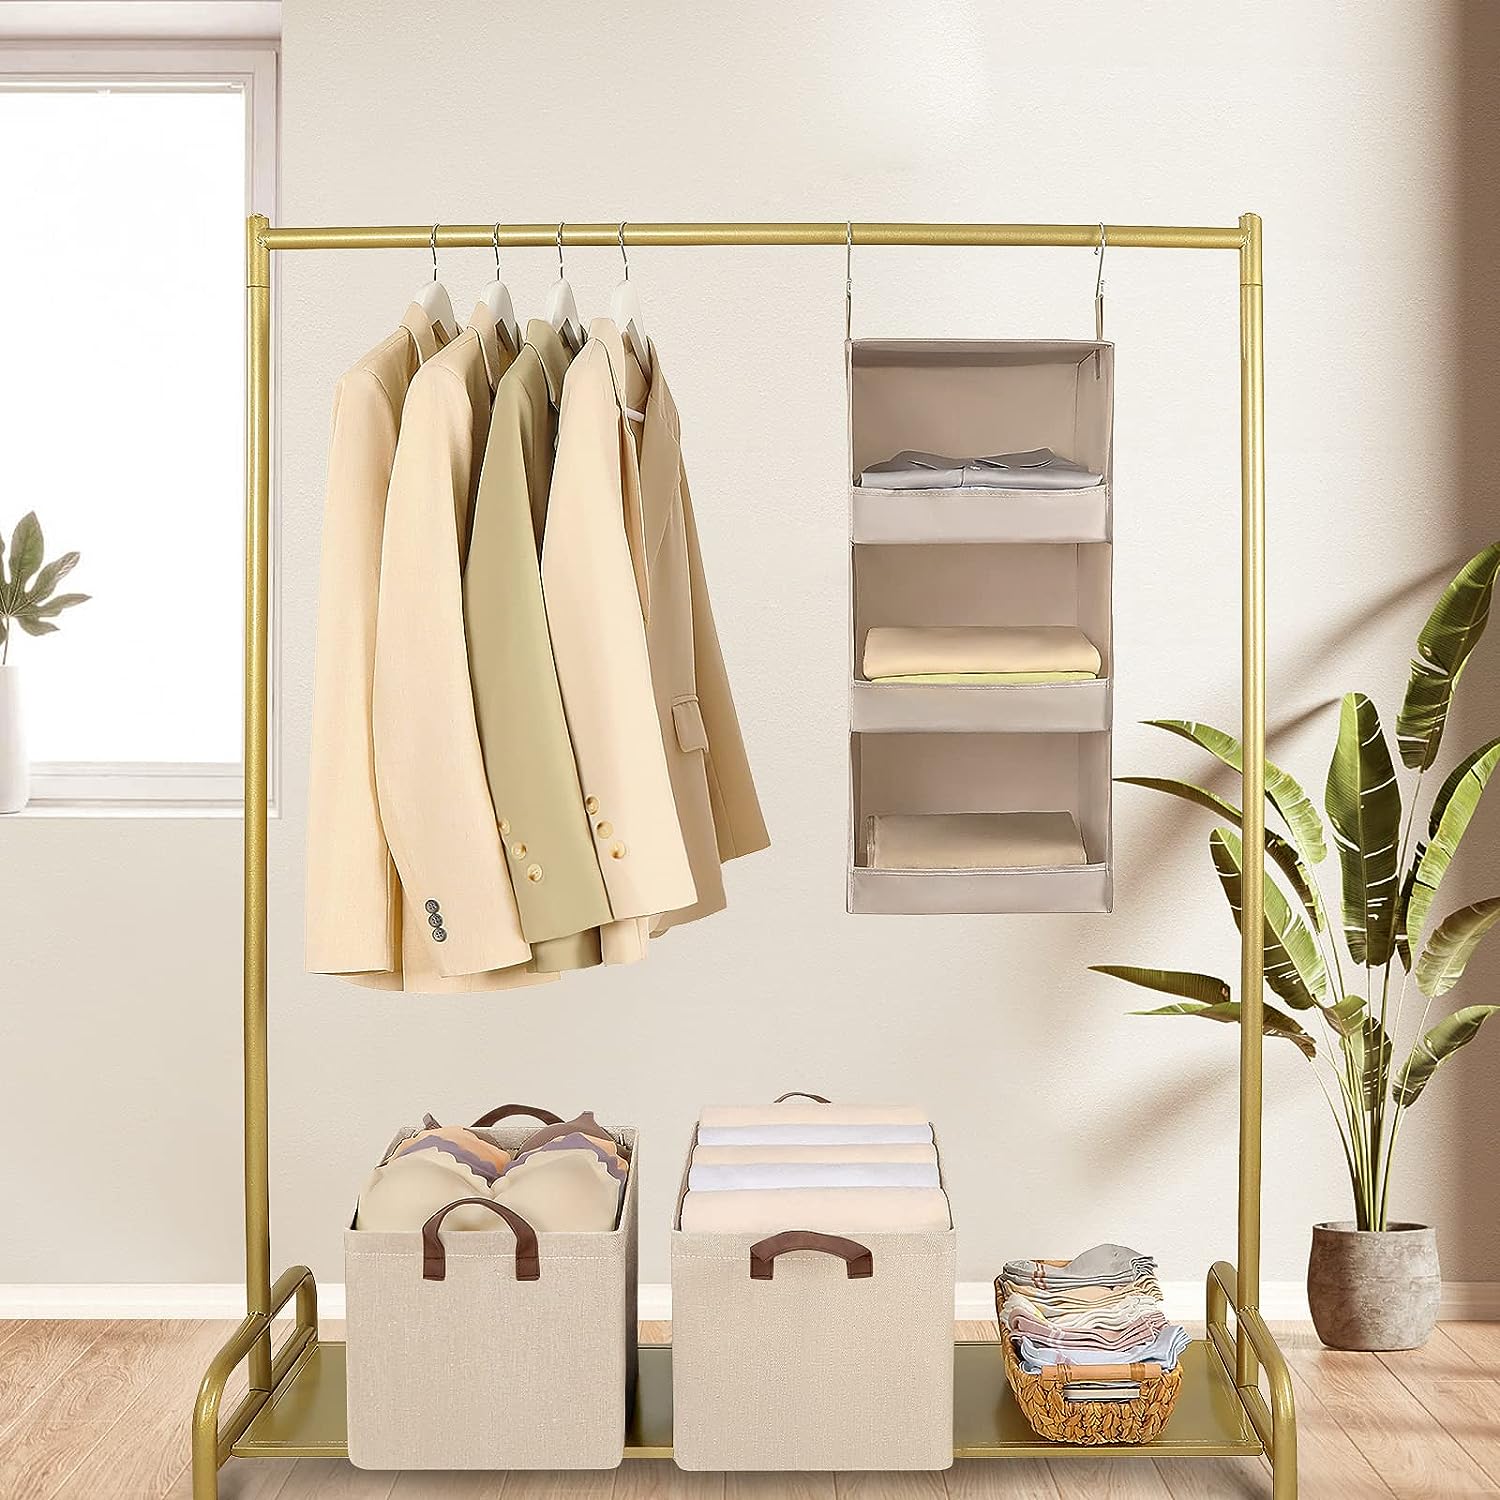 Blushbees Storage Baskets with Metal Frame for Organizing Wardrobe, Shelves, Bedroom, Closet